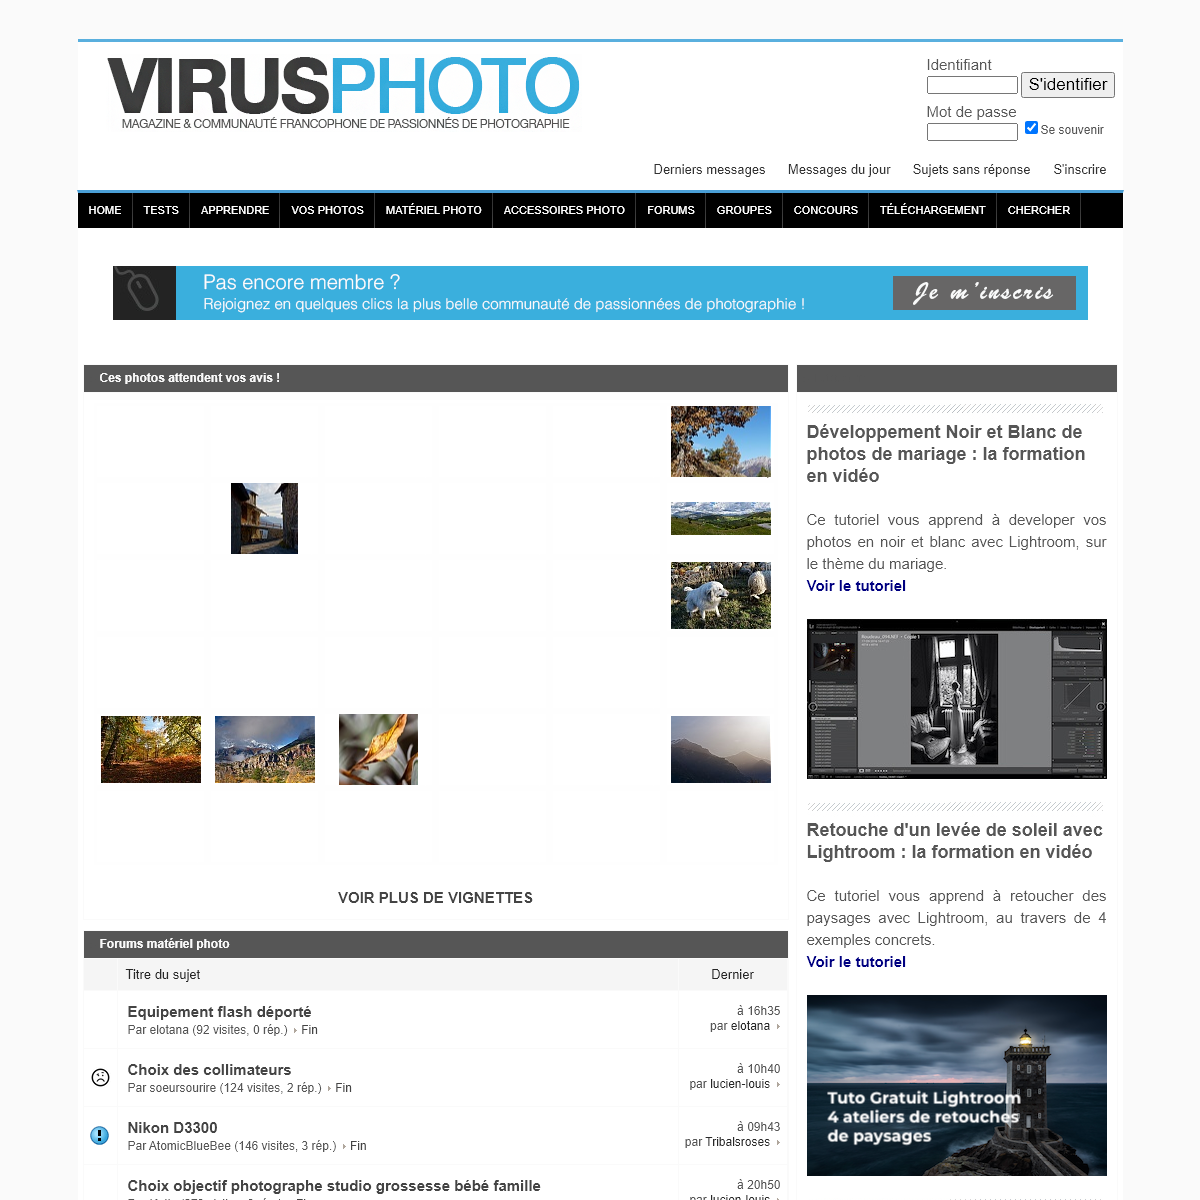 A complete backup of virusphoto.com